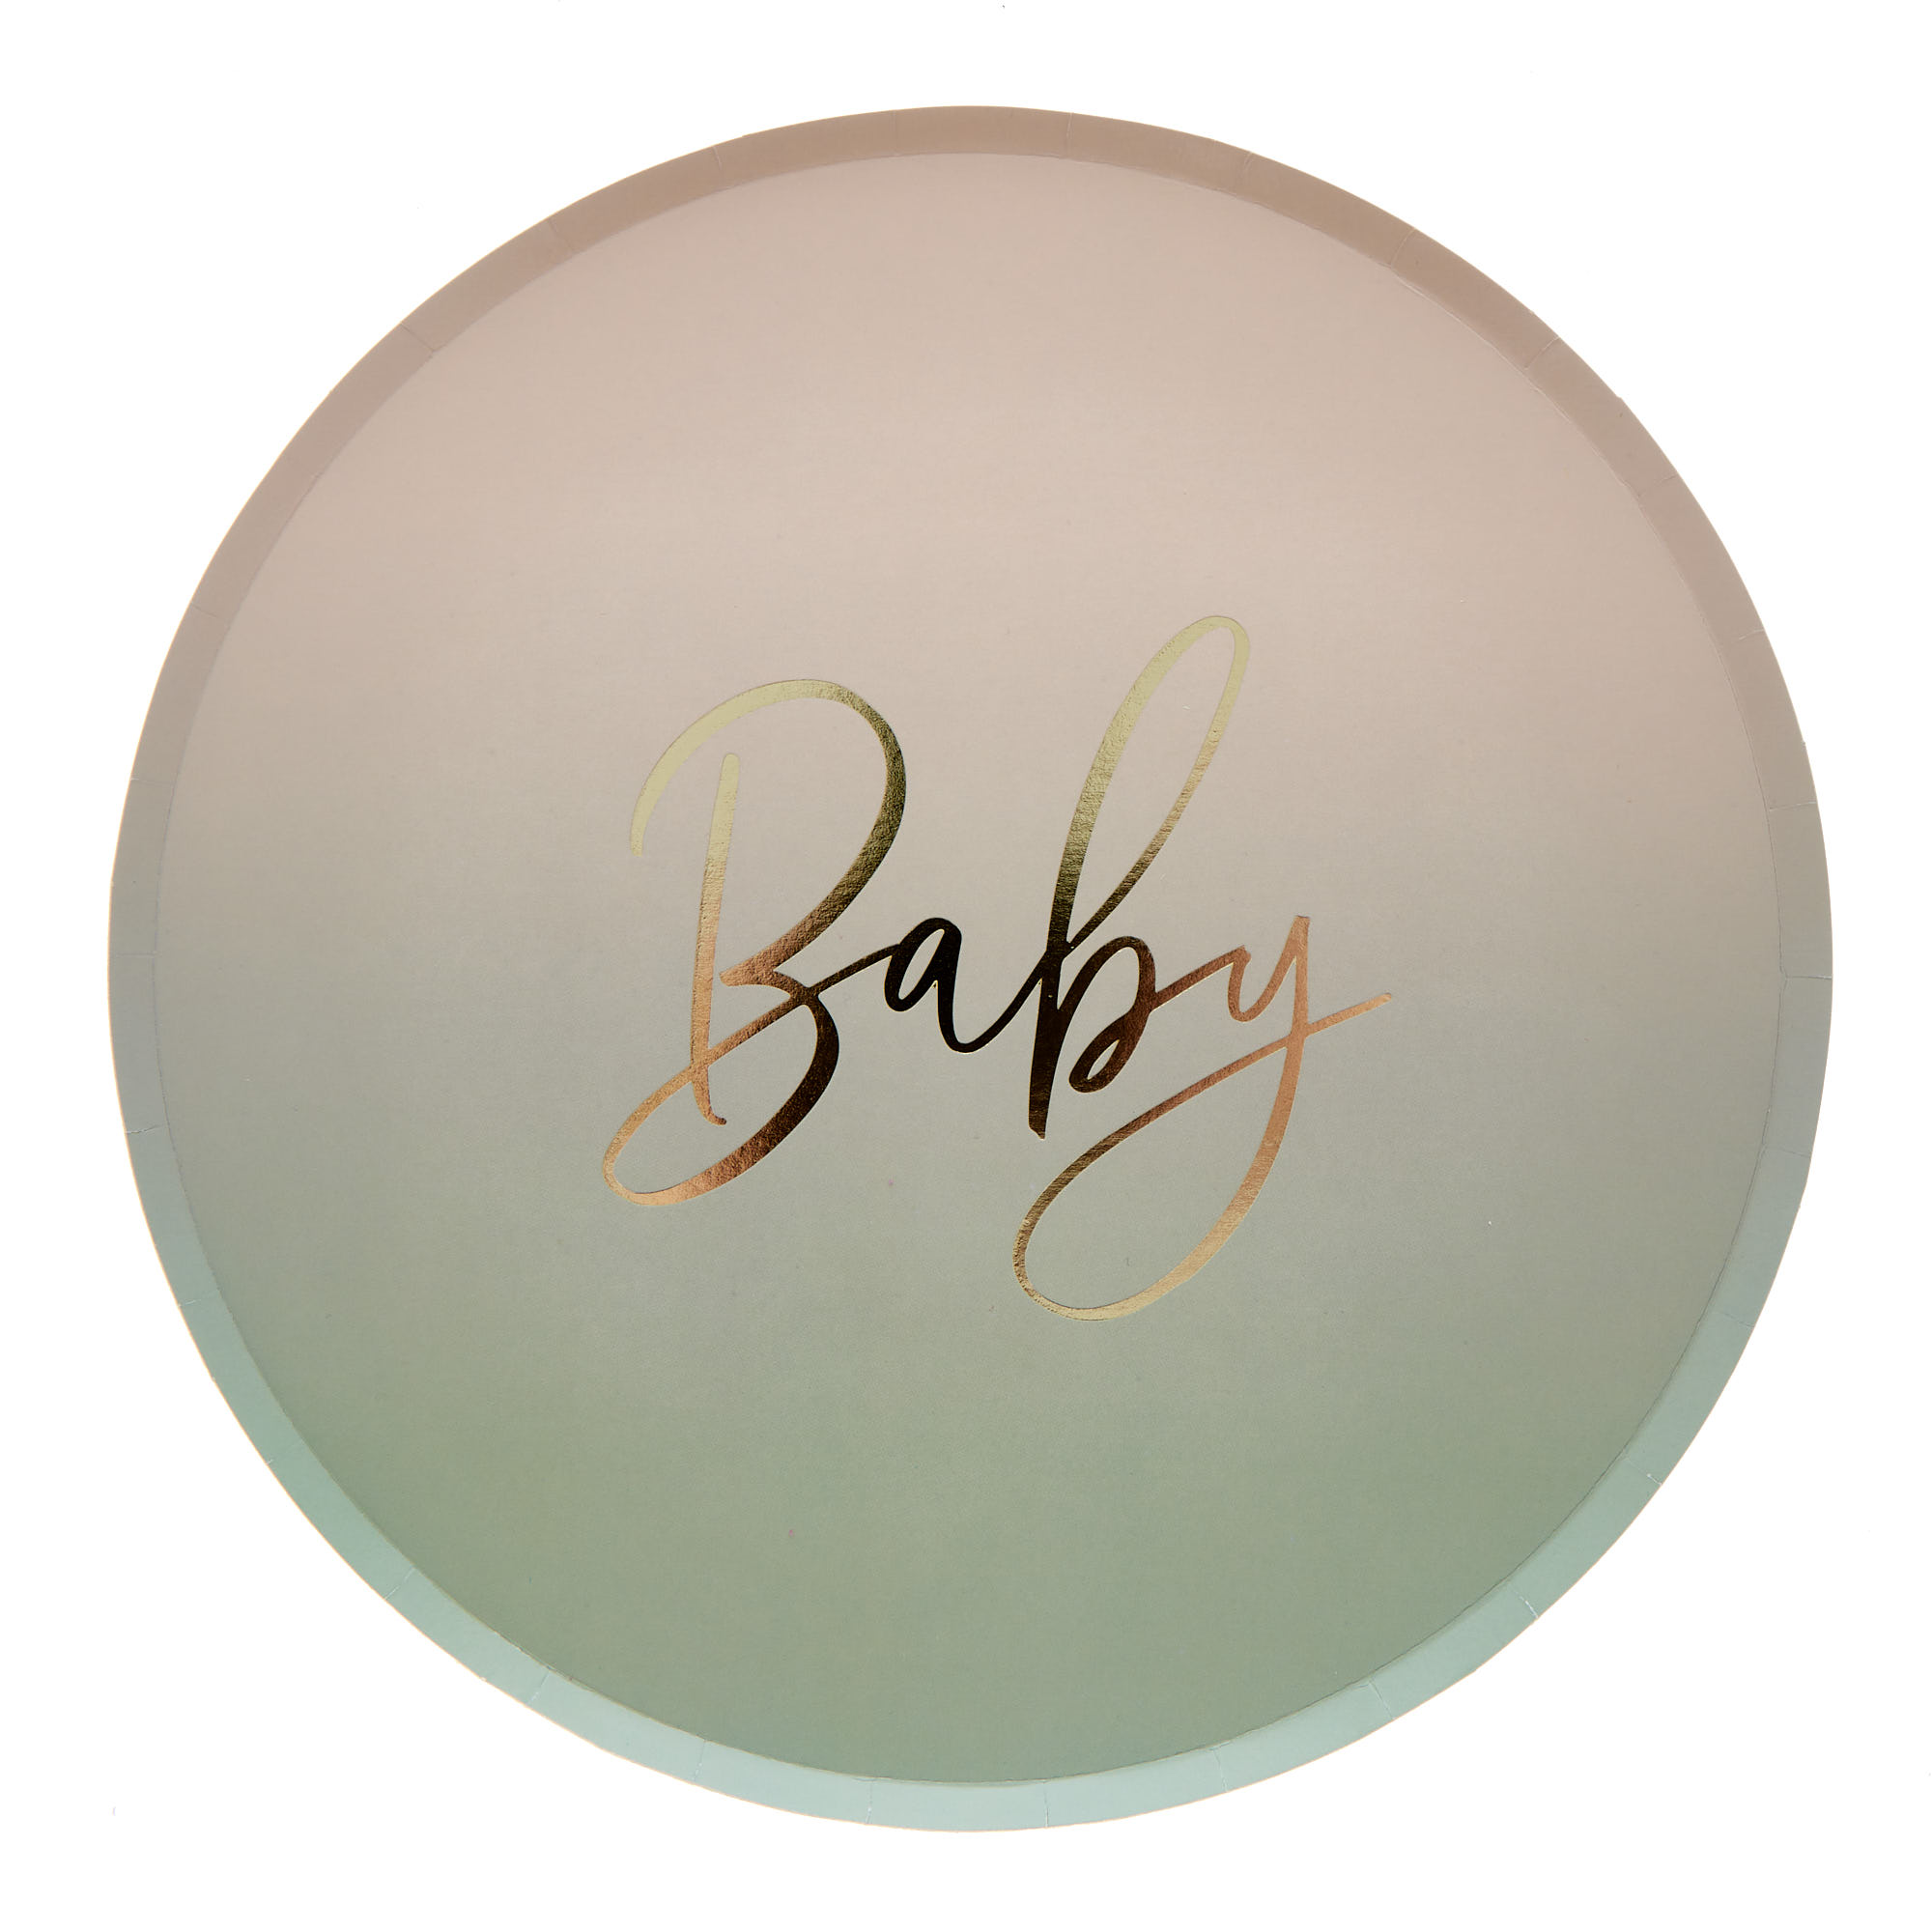 Sage Unisex Baby Shower Party Tableware & Decorations Bundle - 8 Guests